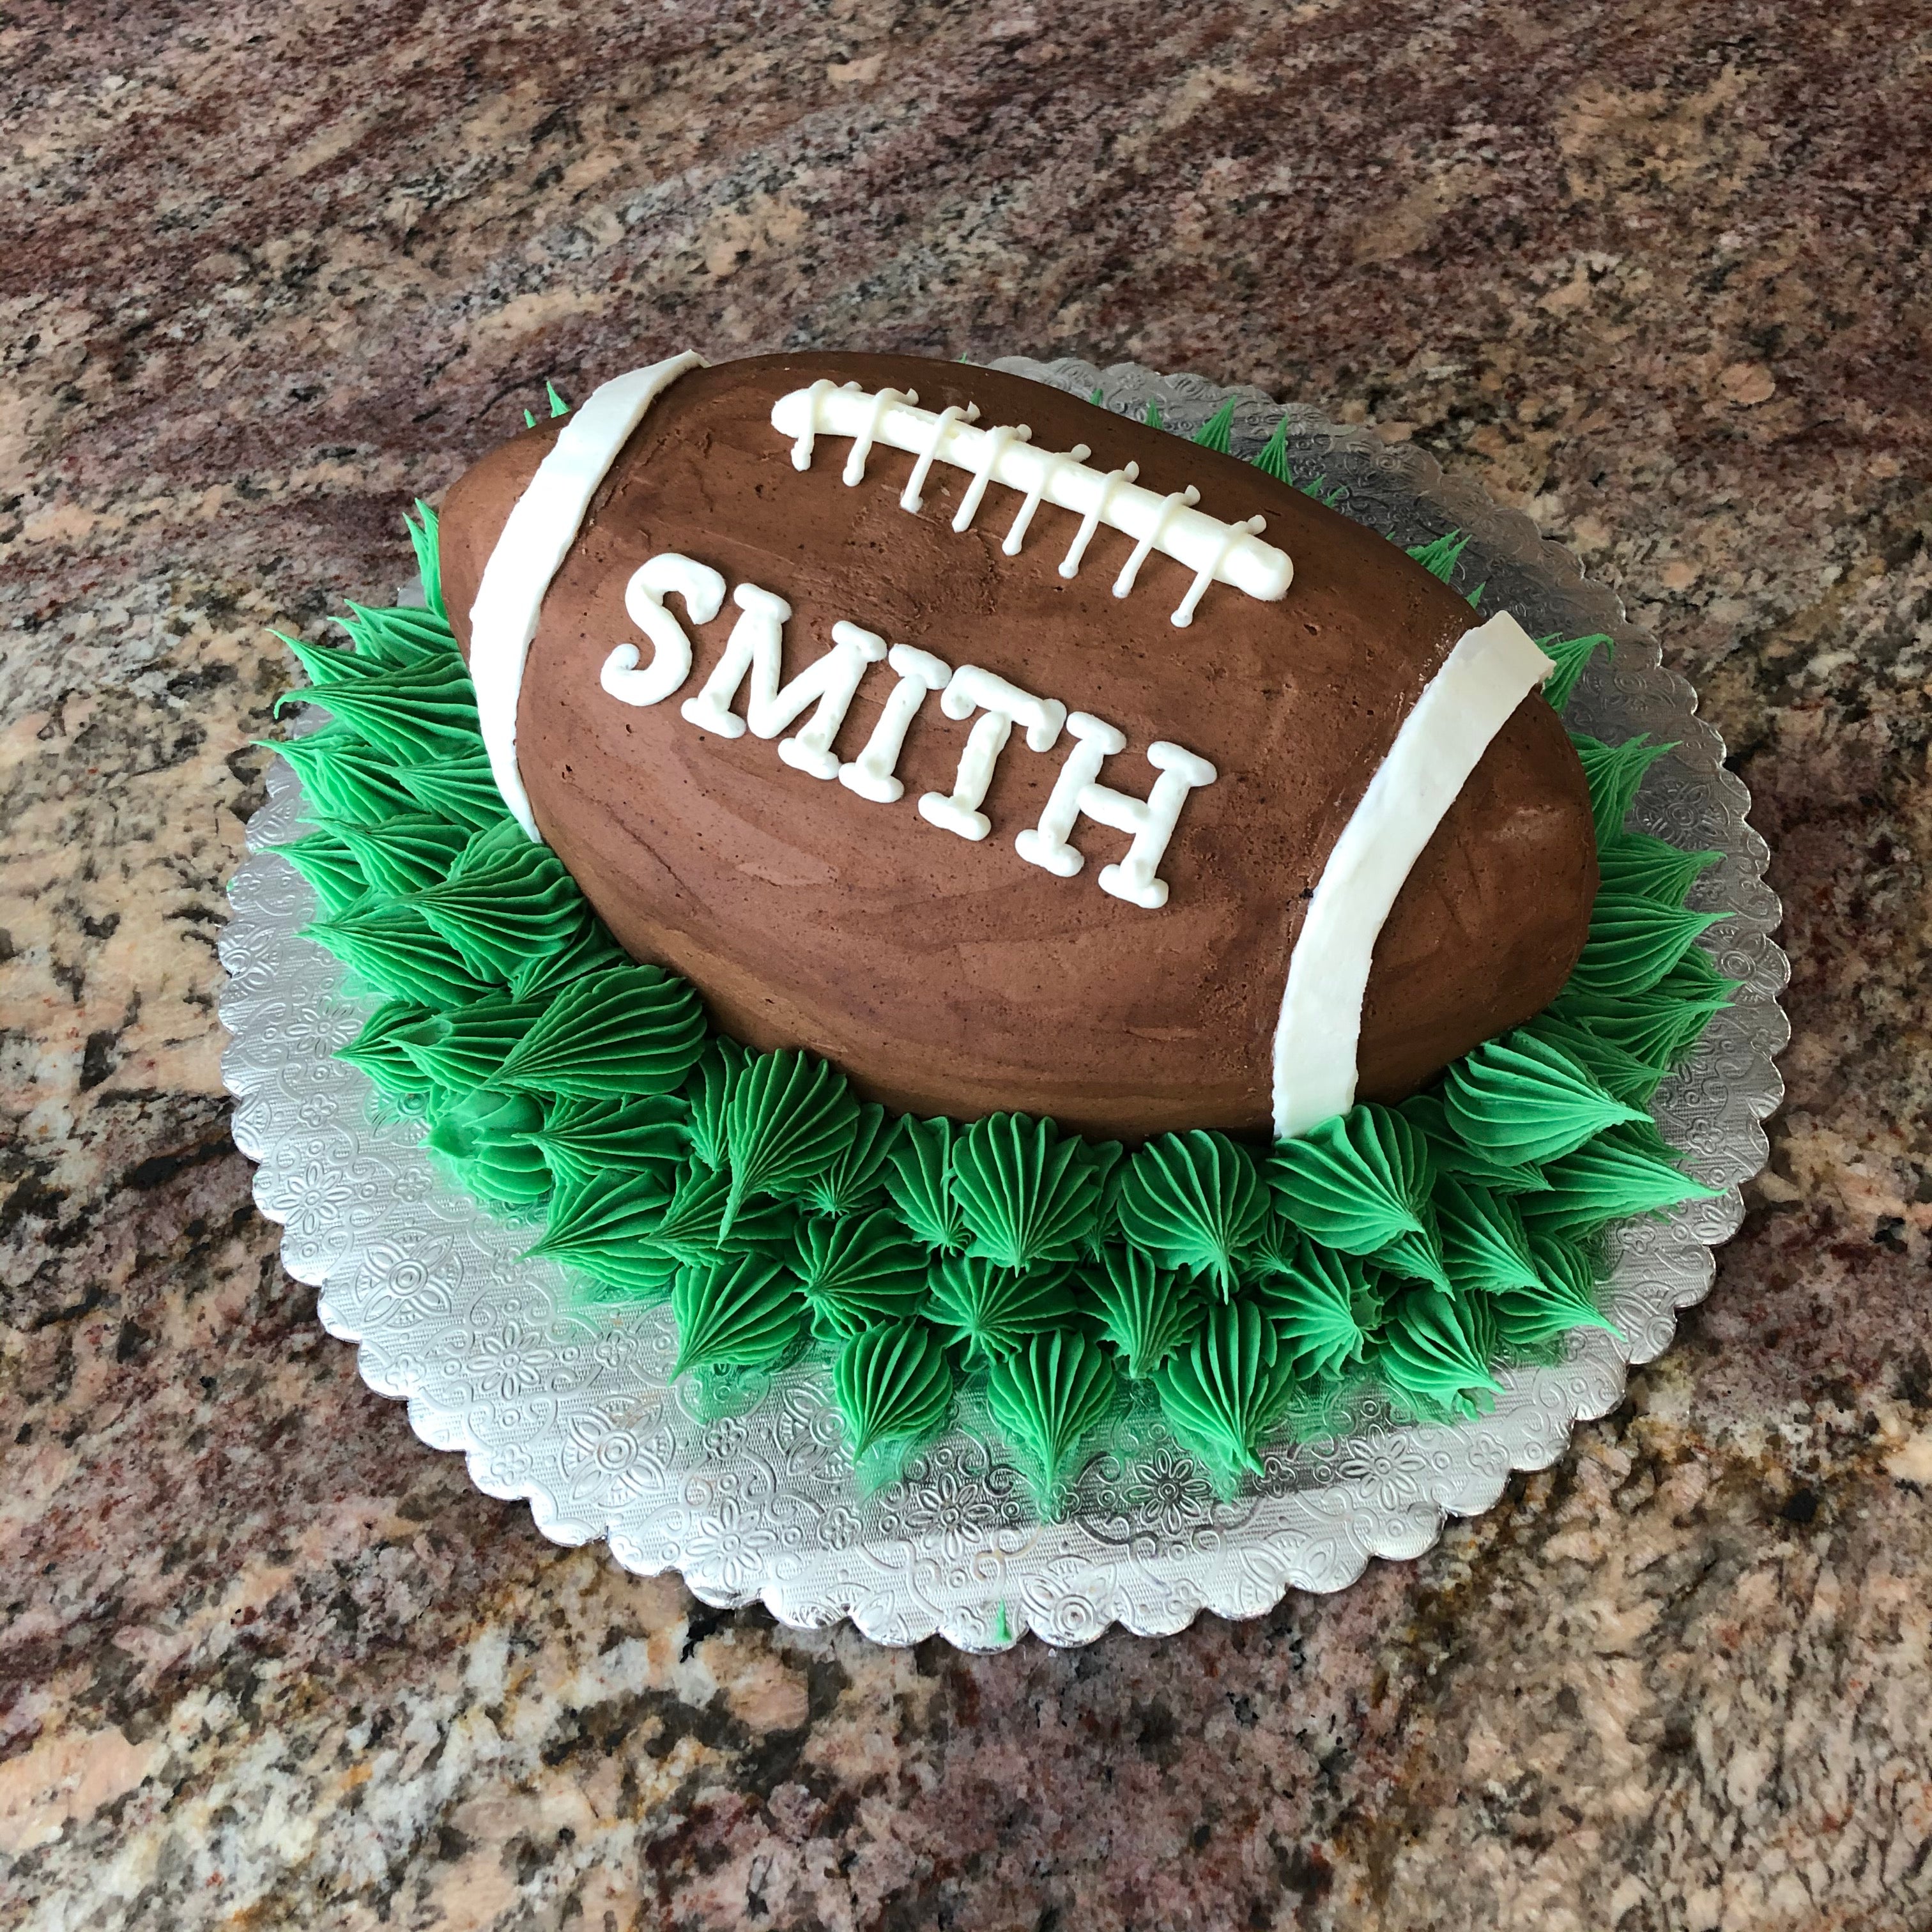 Sports Themed Football Cake | Birthday Cakes, Special Custom Cakes | Eska  Creative Gifting